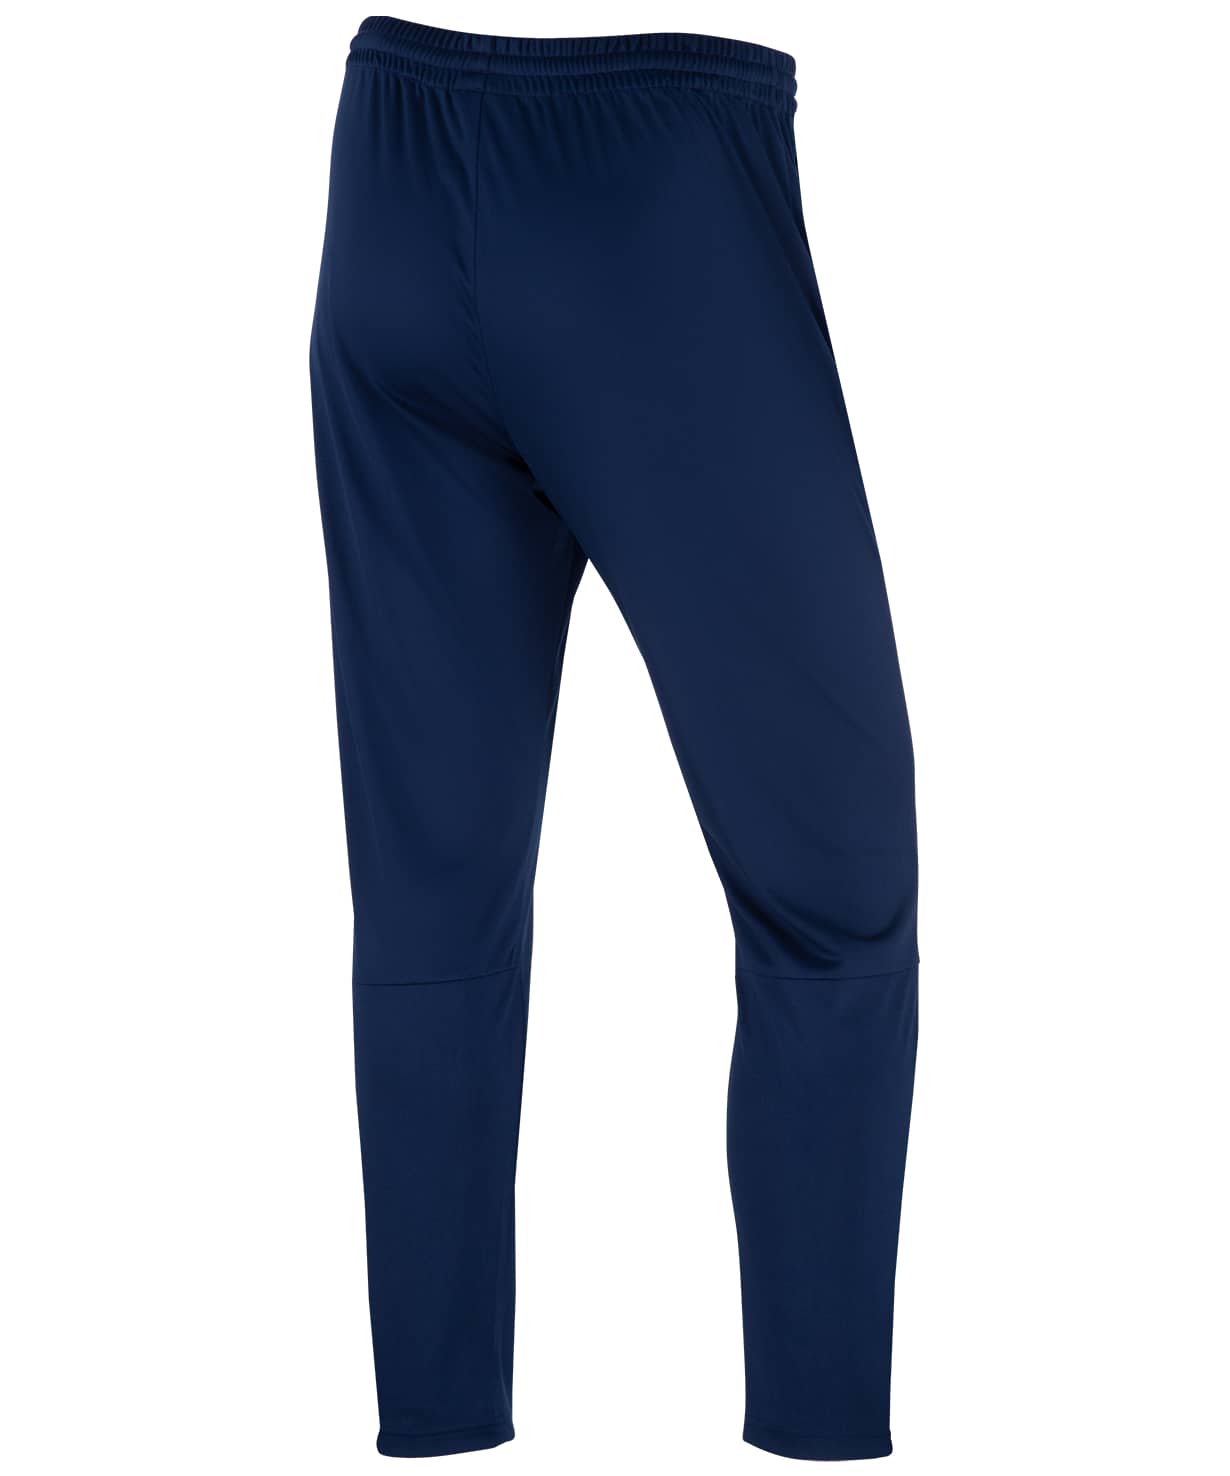 фото Брюки тренировочные JOGEL CAMP Tapered Training Pants, темно-синий Football-54 